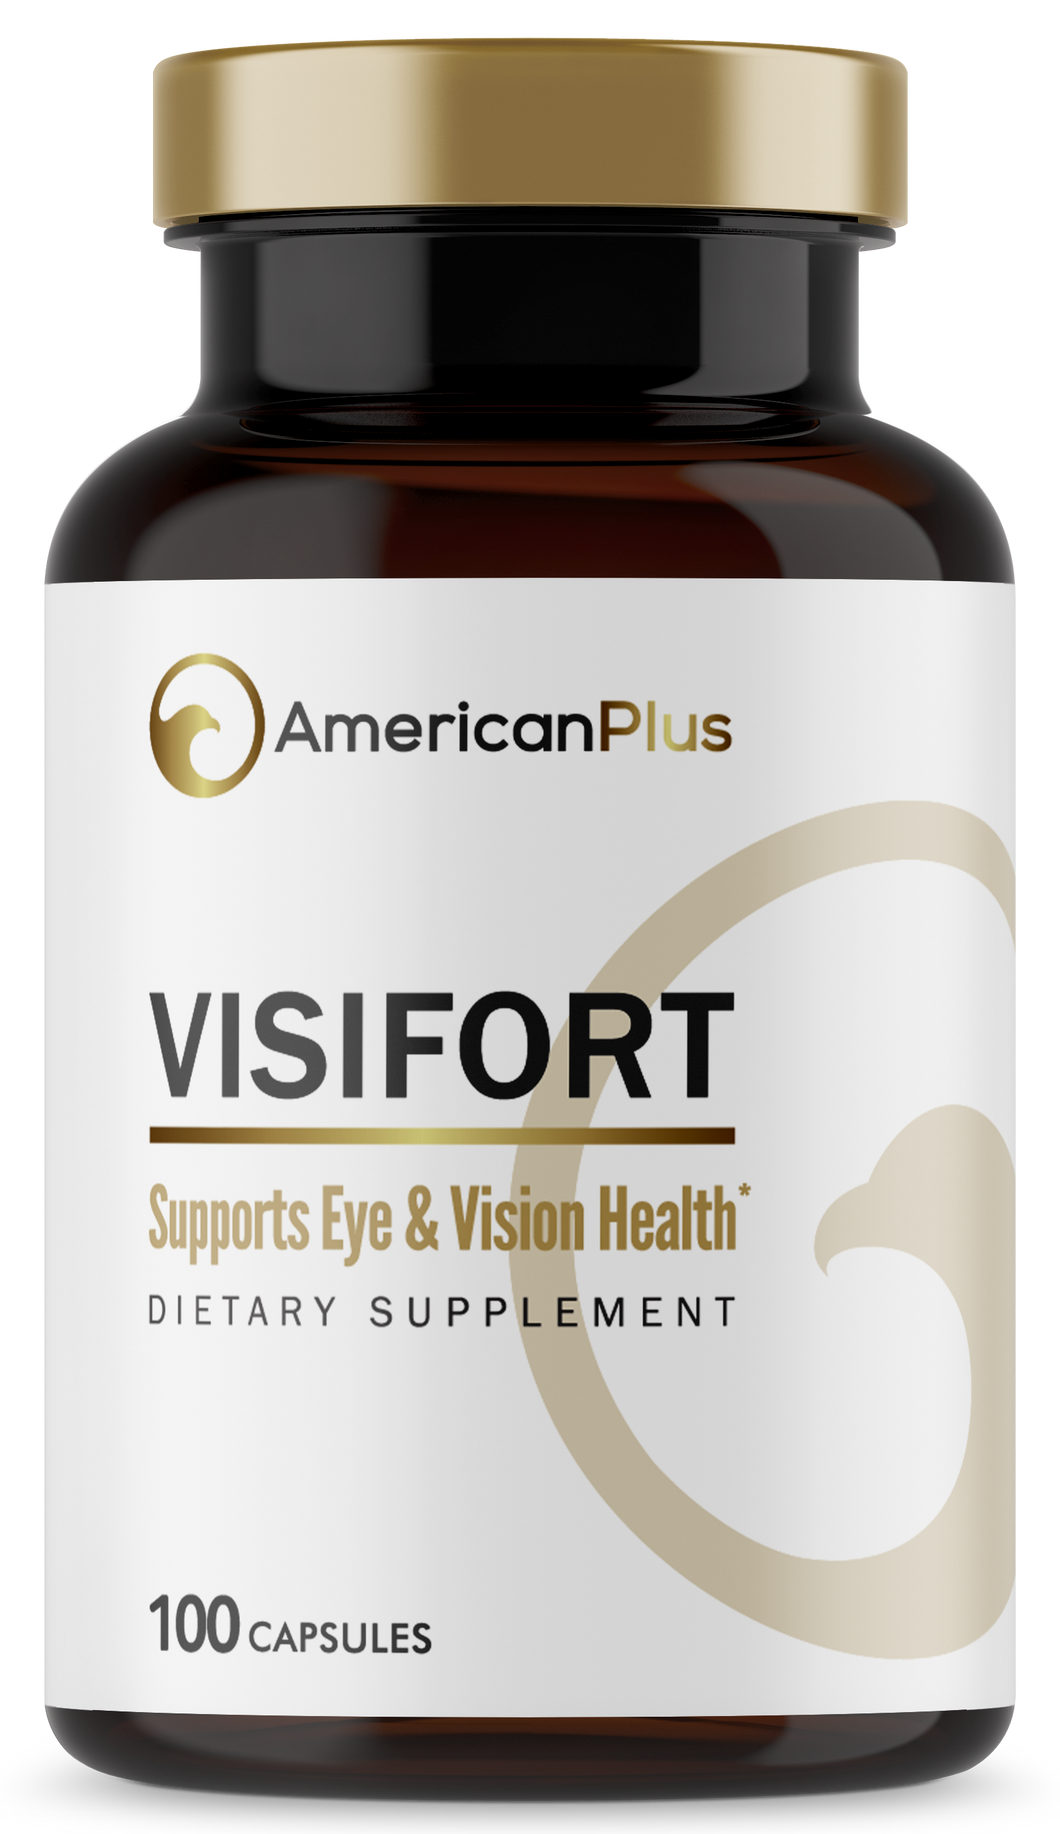 Visifort eye vitamins for eye health